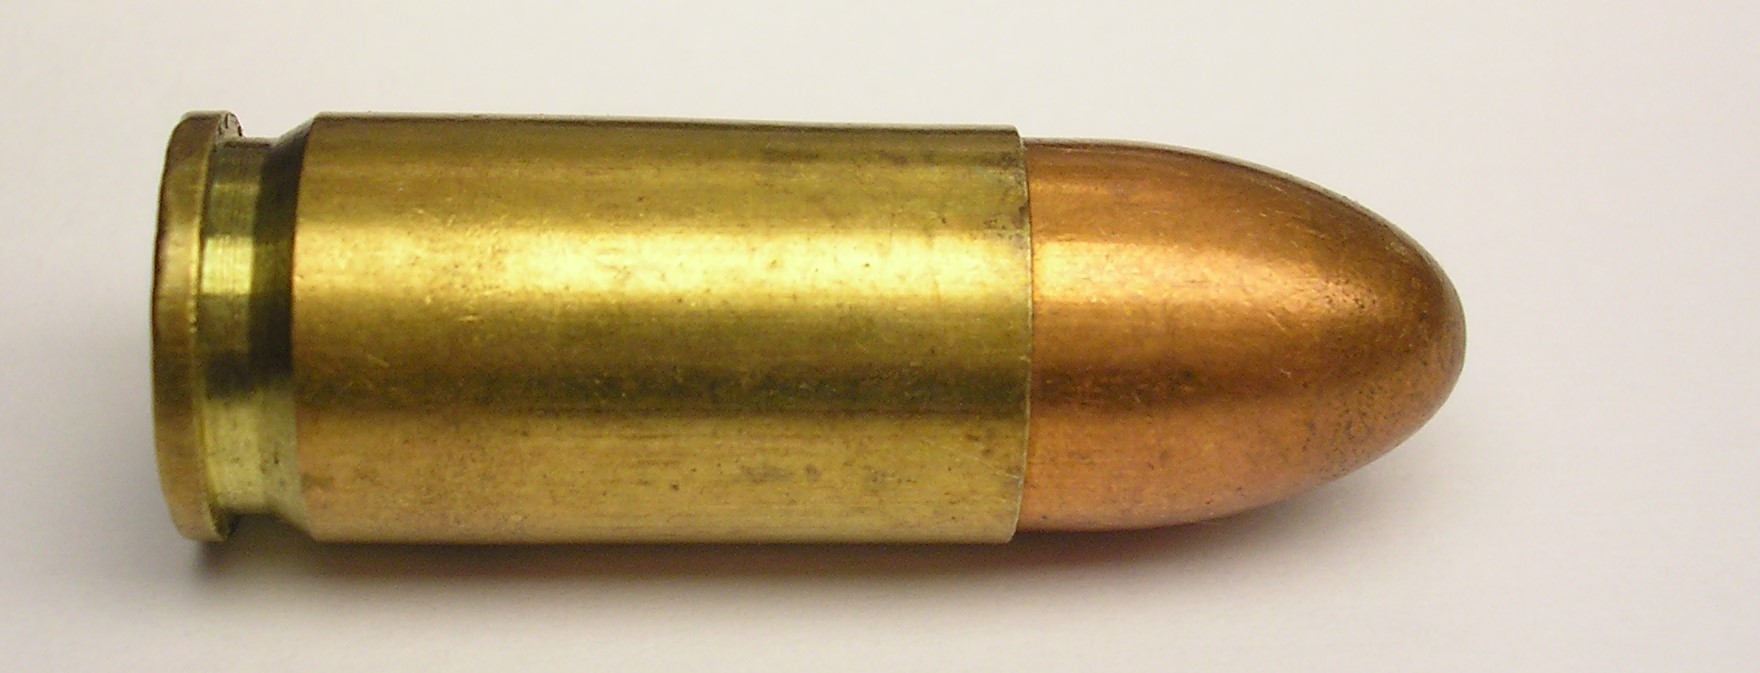 ./ammo/9mm/patroner/Patron-9mm-RA-Helmantel-1951-1.JPG